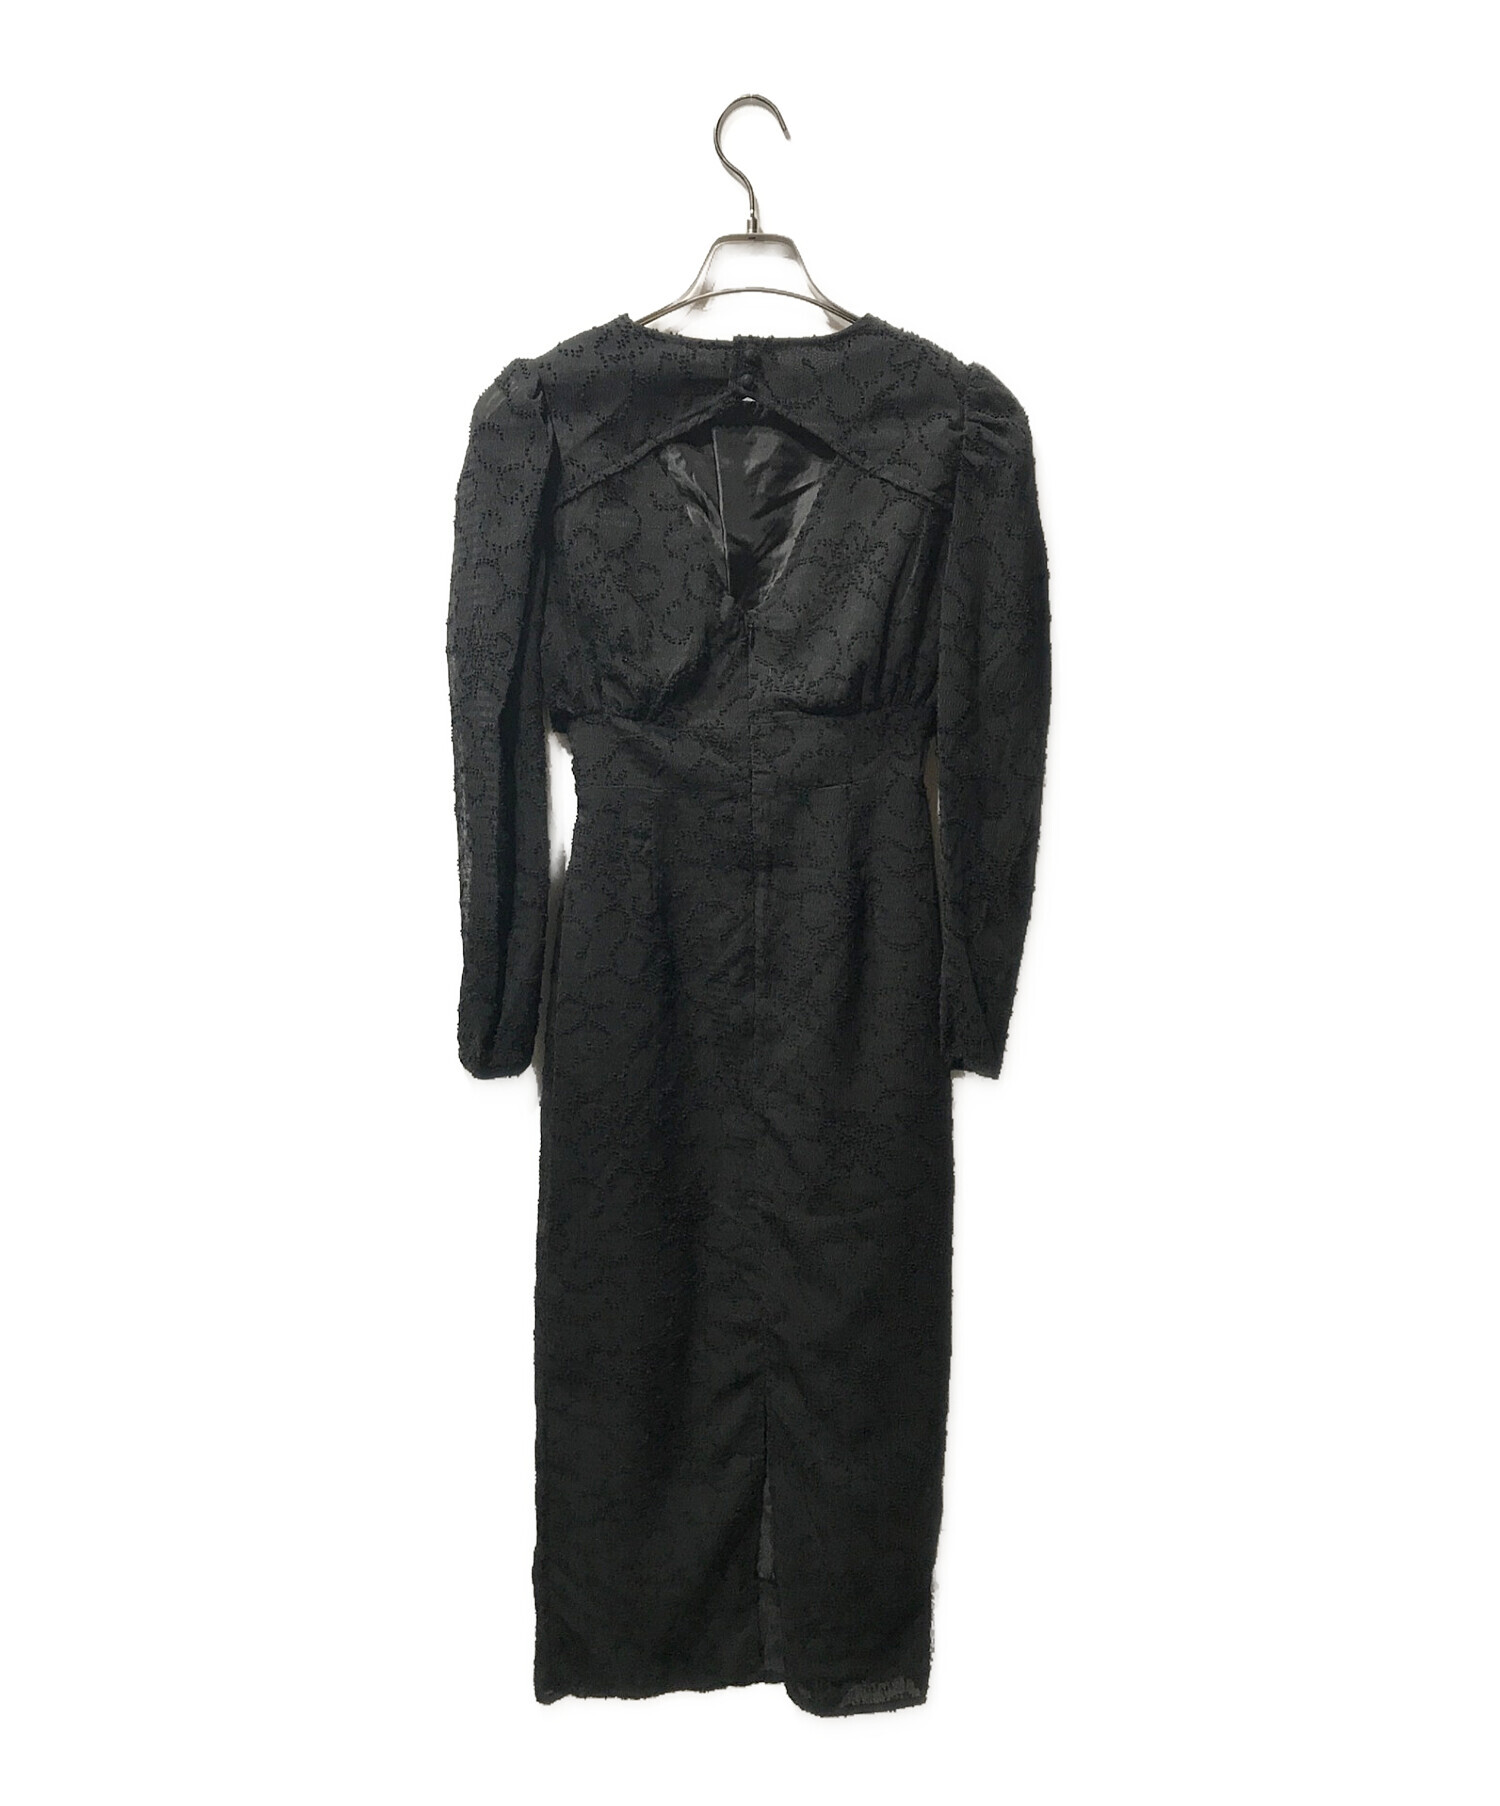 Knuth Marf (クヌースマーフ) Back Open Sheer Dress レースワンピース ブラック サイズ:S